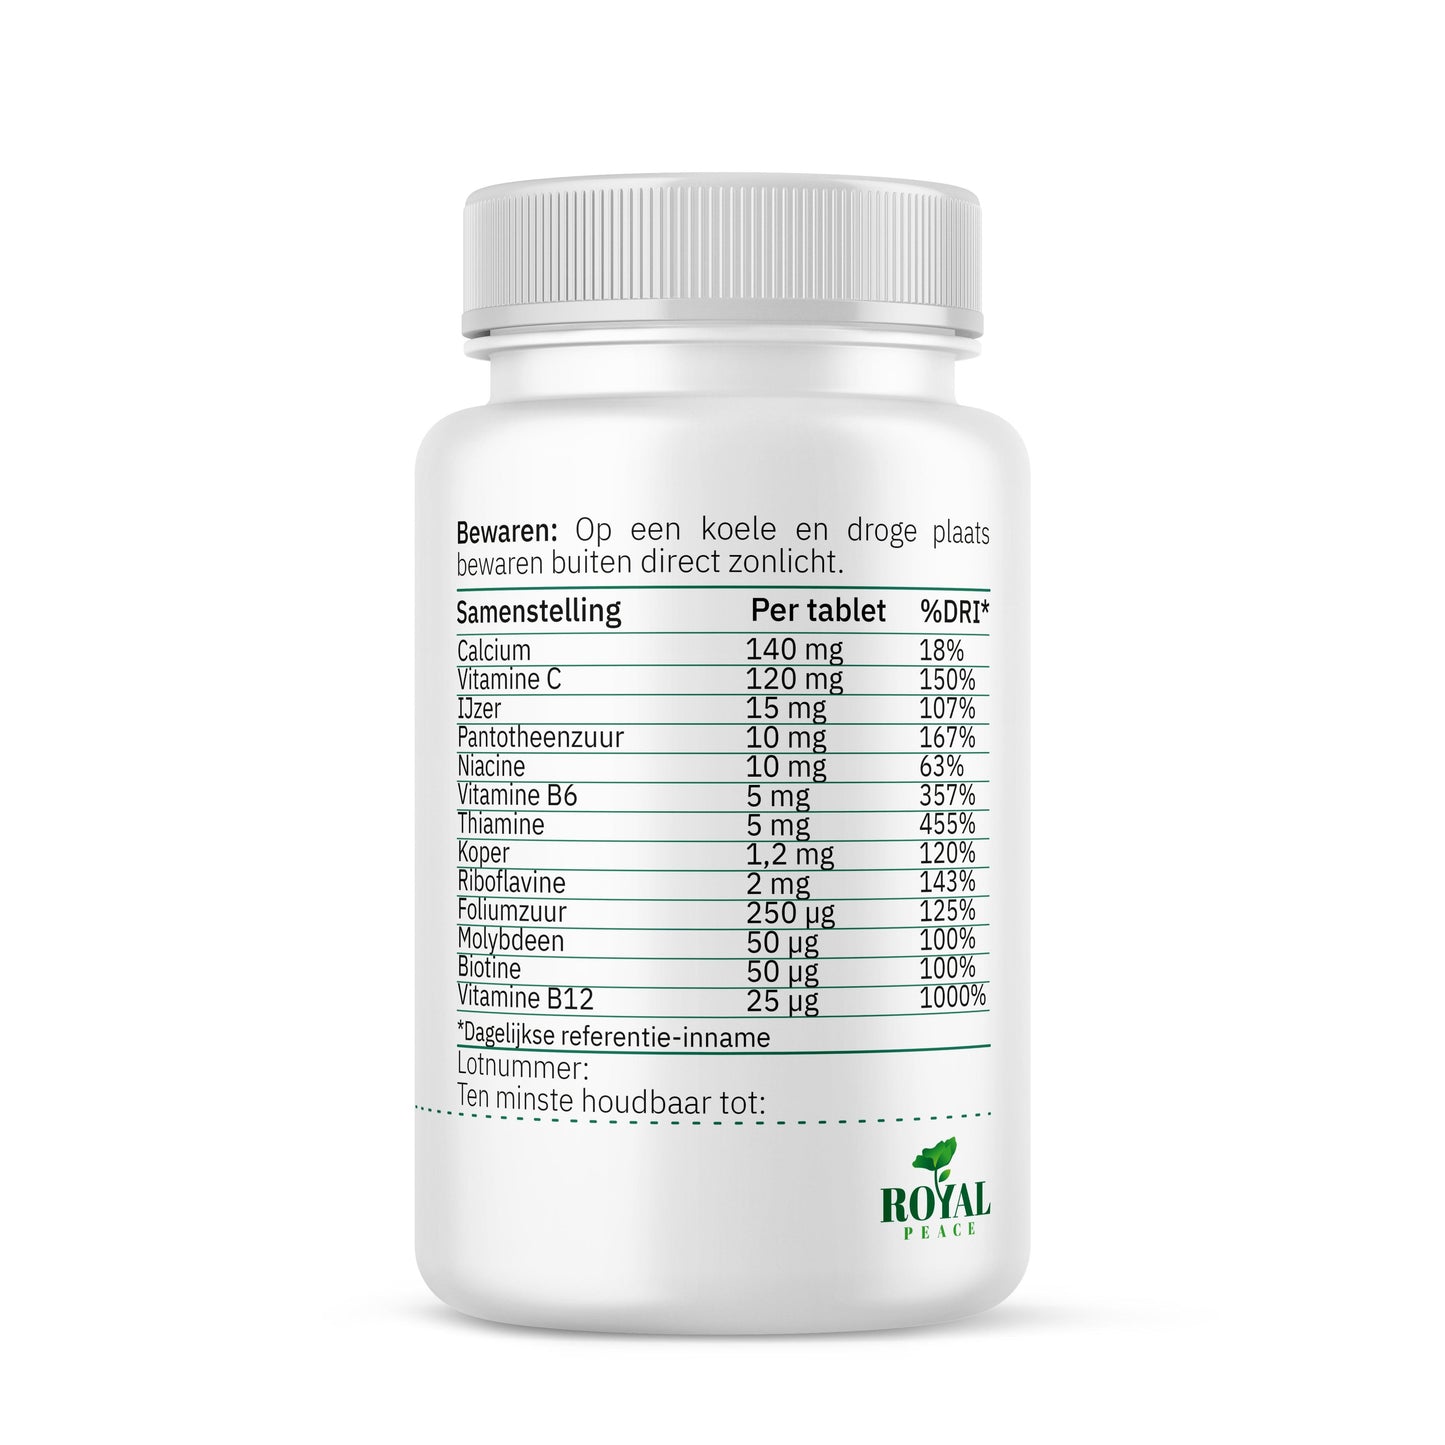 IJzer 15 mg + vitaminen & mineralen - RoyalPeace